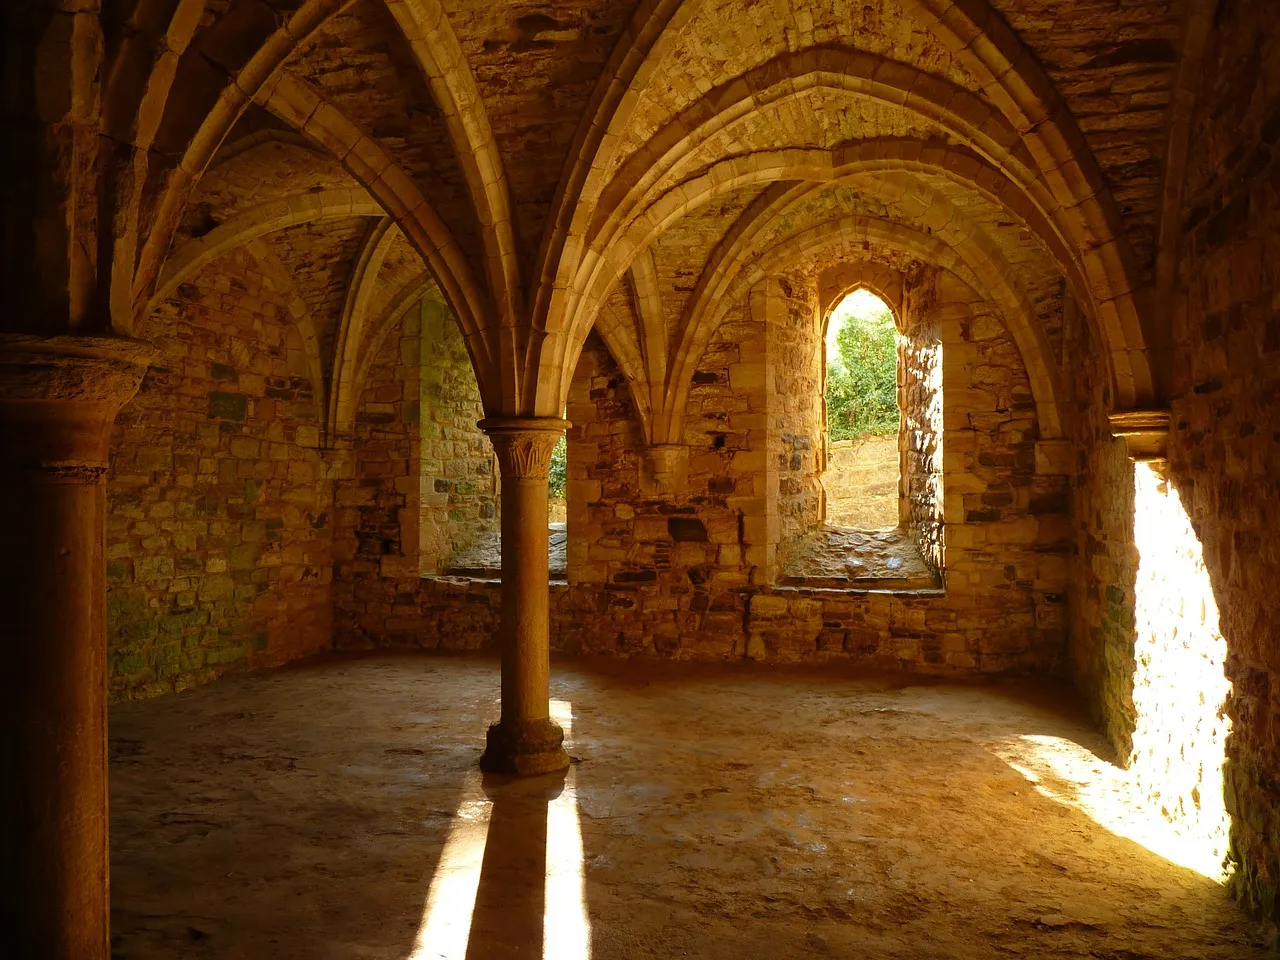 1066 Country Walk, Battle Abbey Monastery